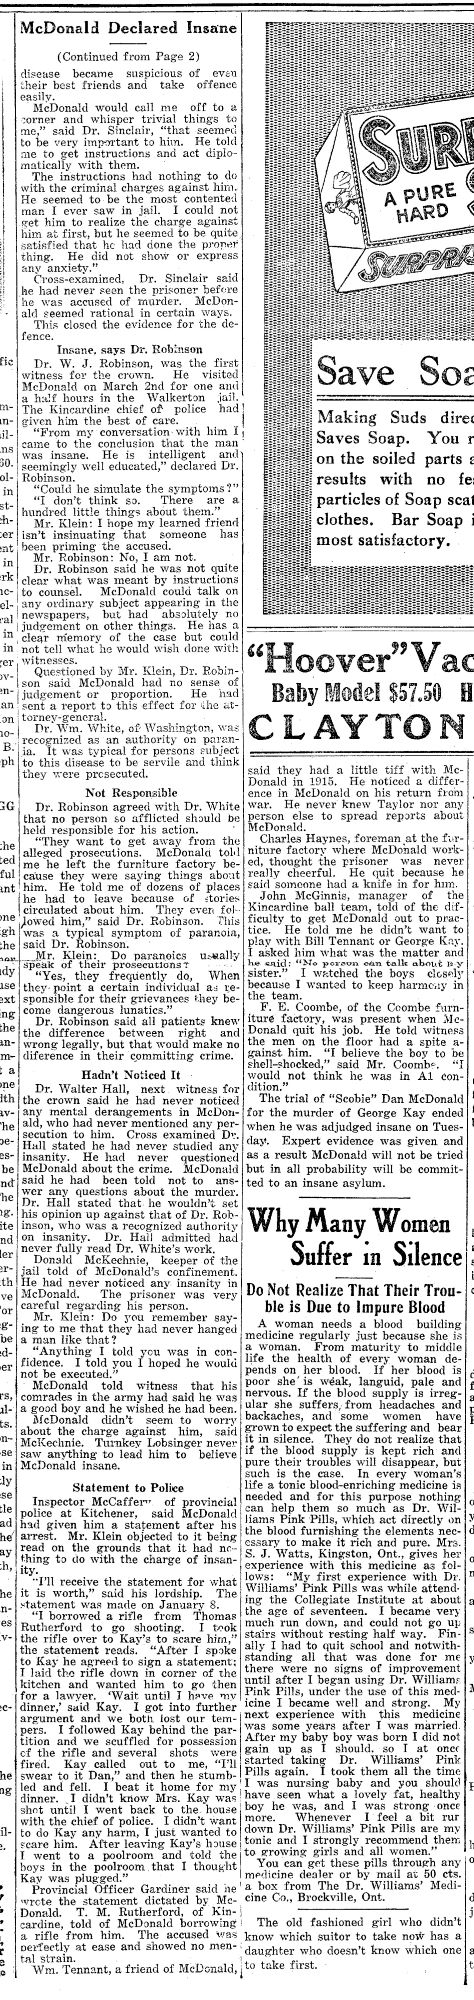 Kincardine Reporter, March 15, 1923